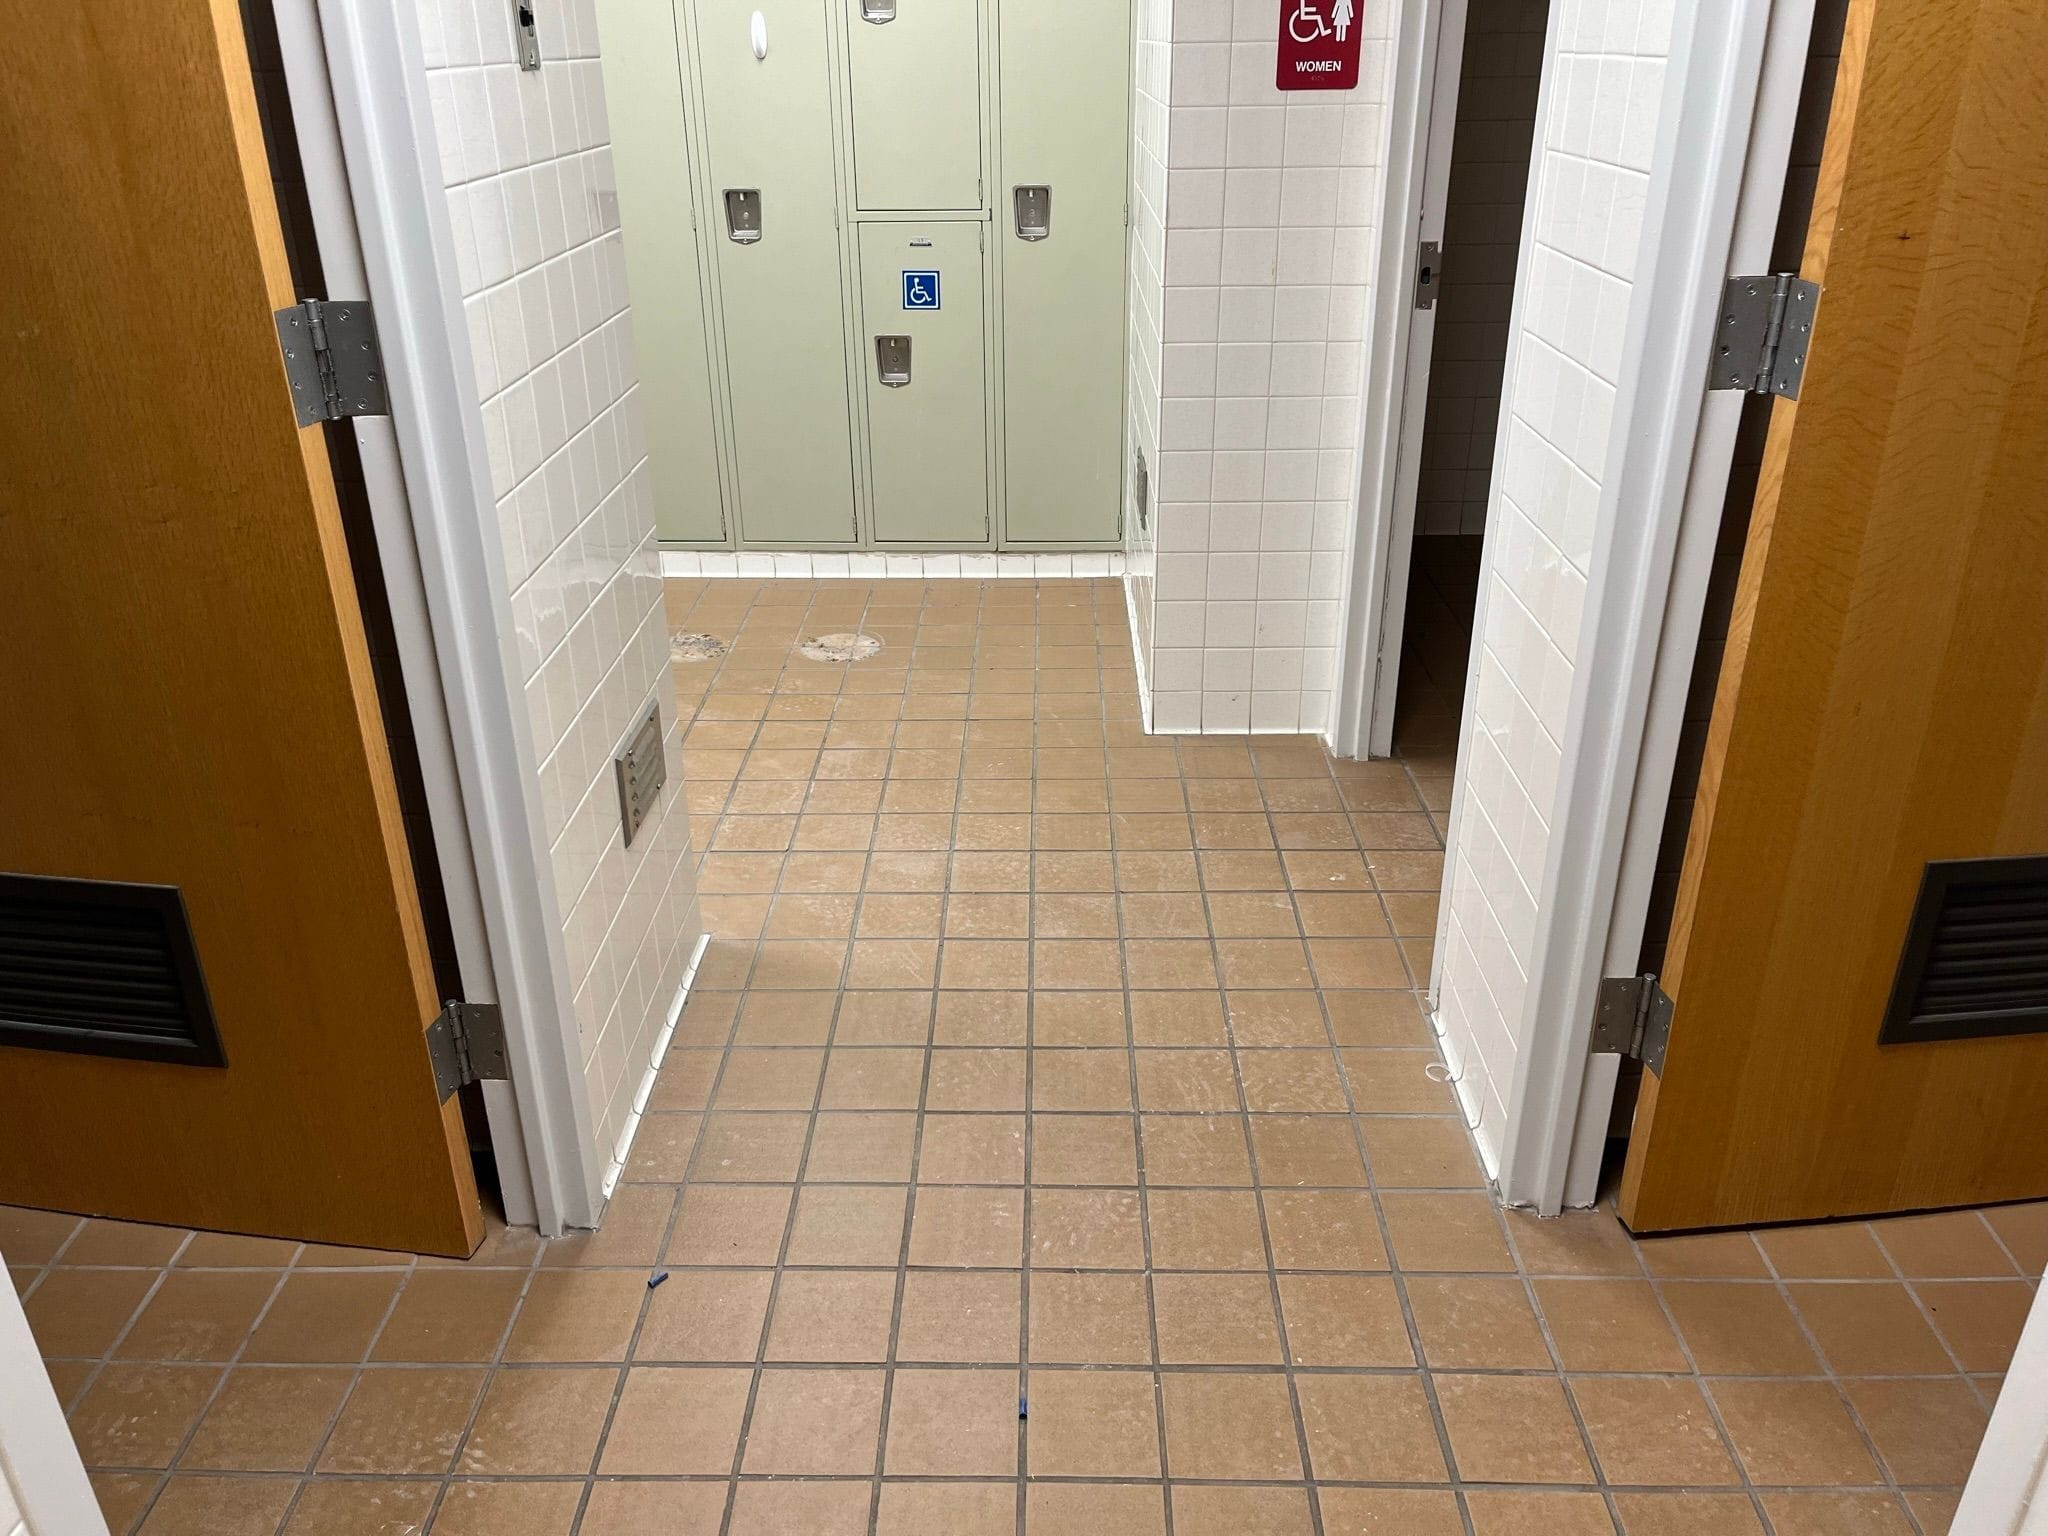 Tile floor in locker room